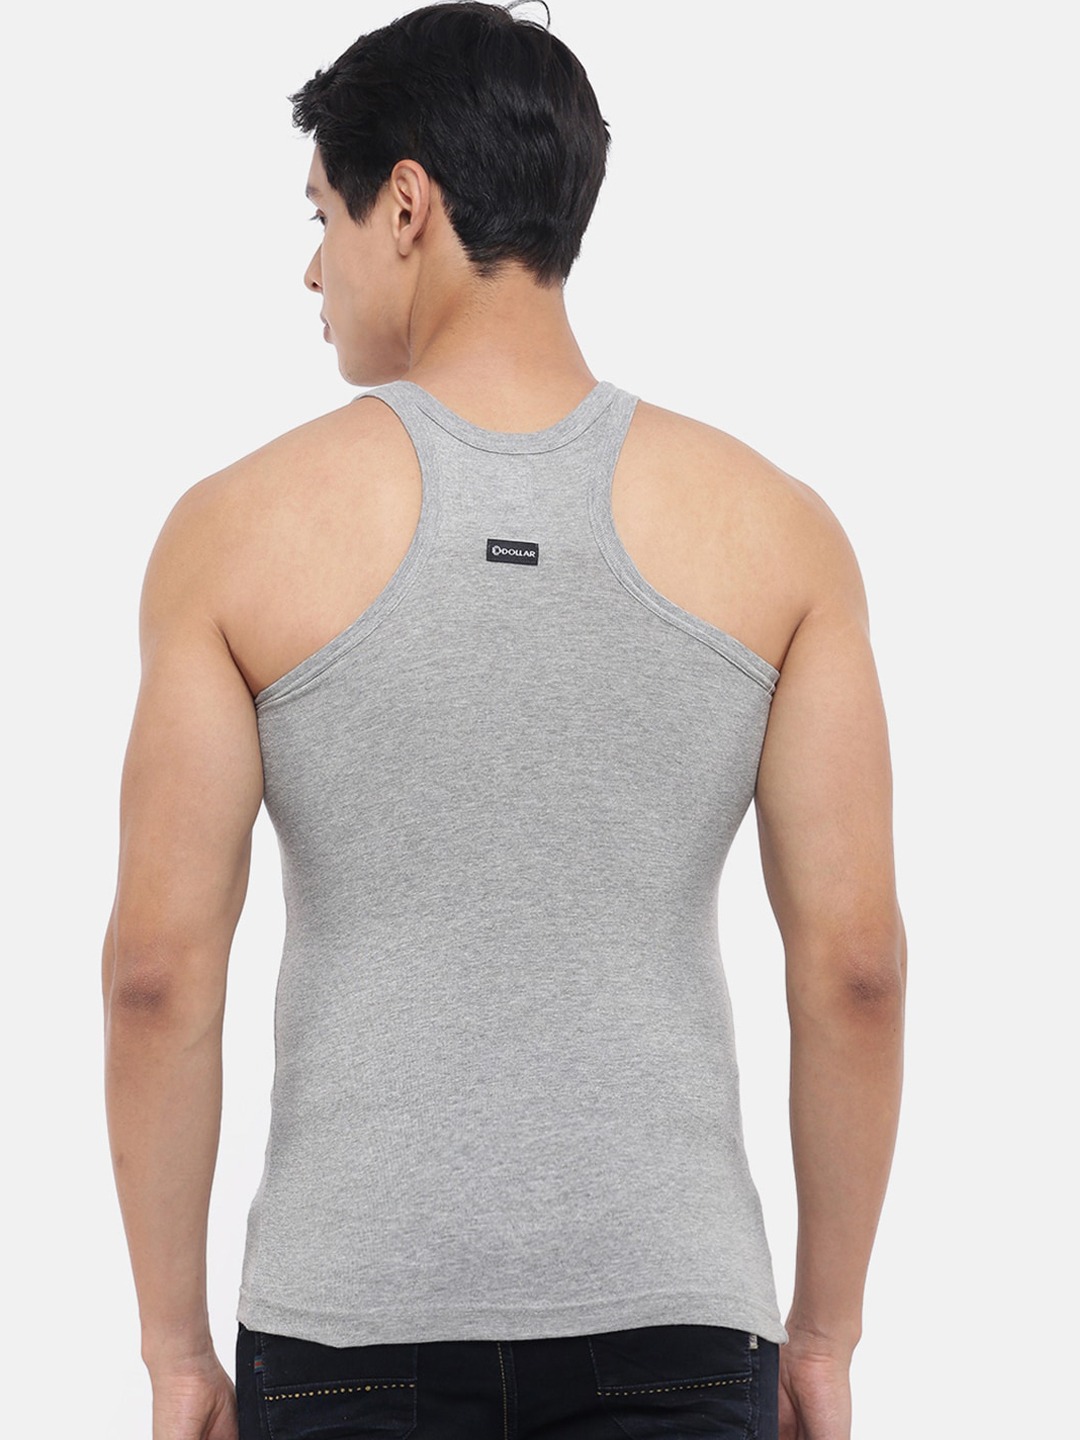 Clothing Innerwear Vests | Dollar Bigboss Men Pack Of 5 Assorted Cotton Loose-Fit Gym Vests - MN03952